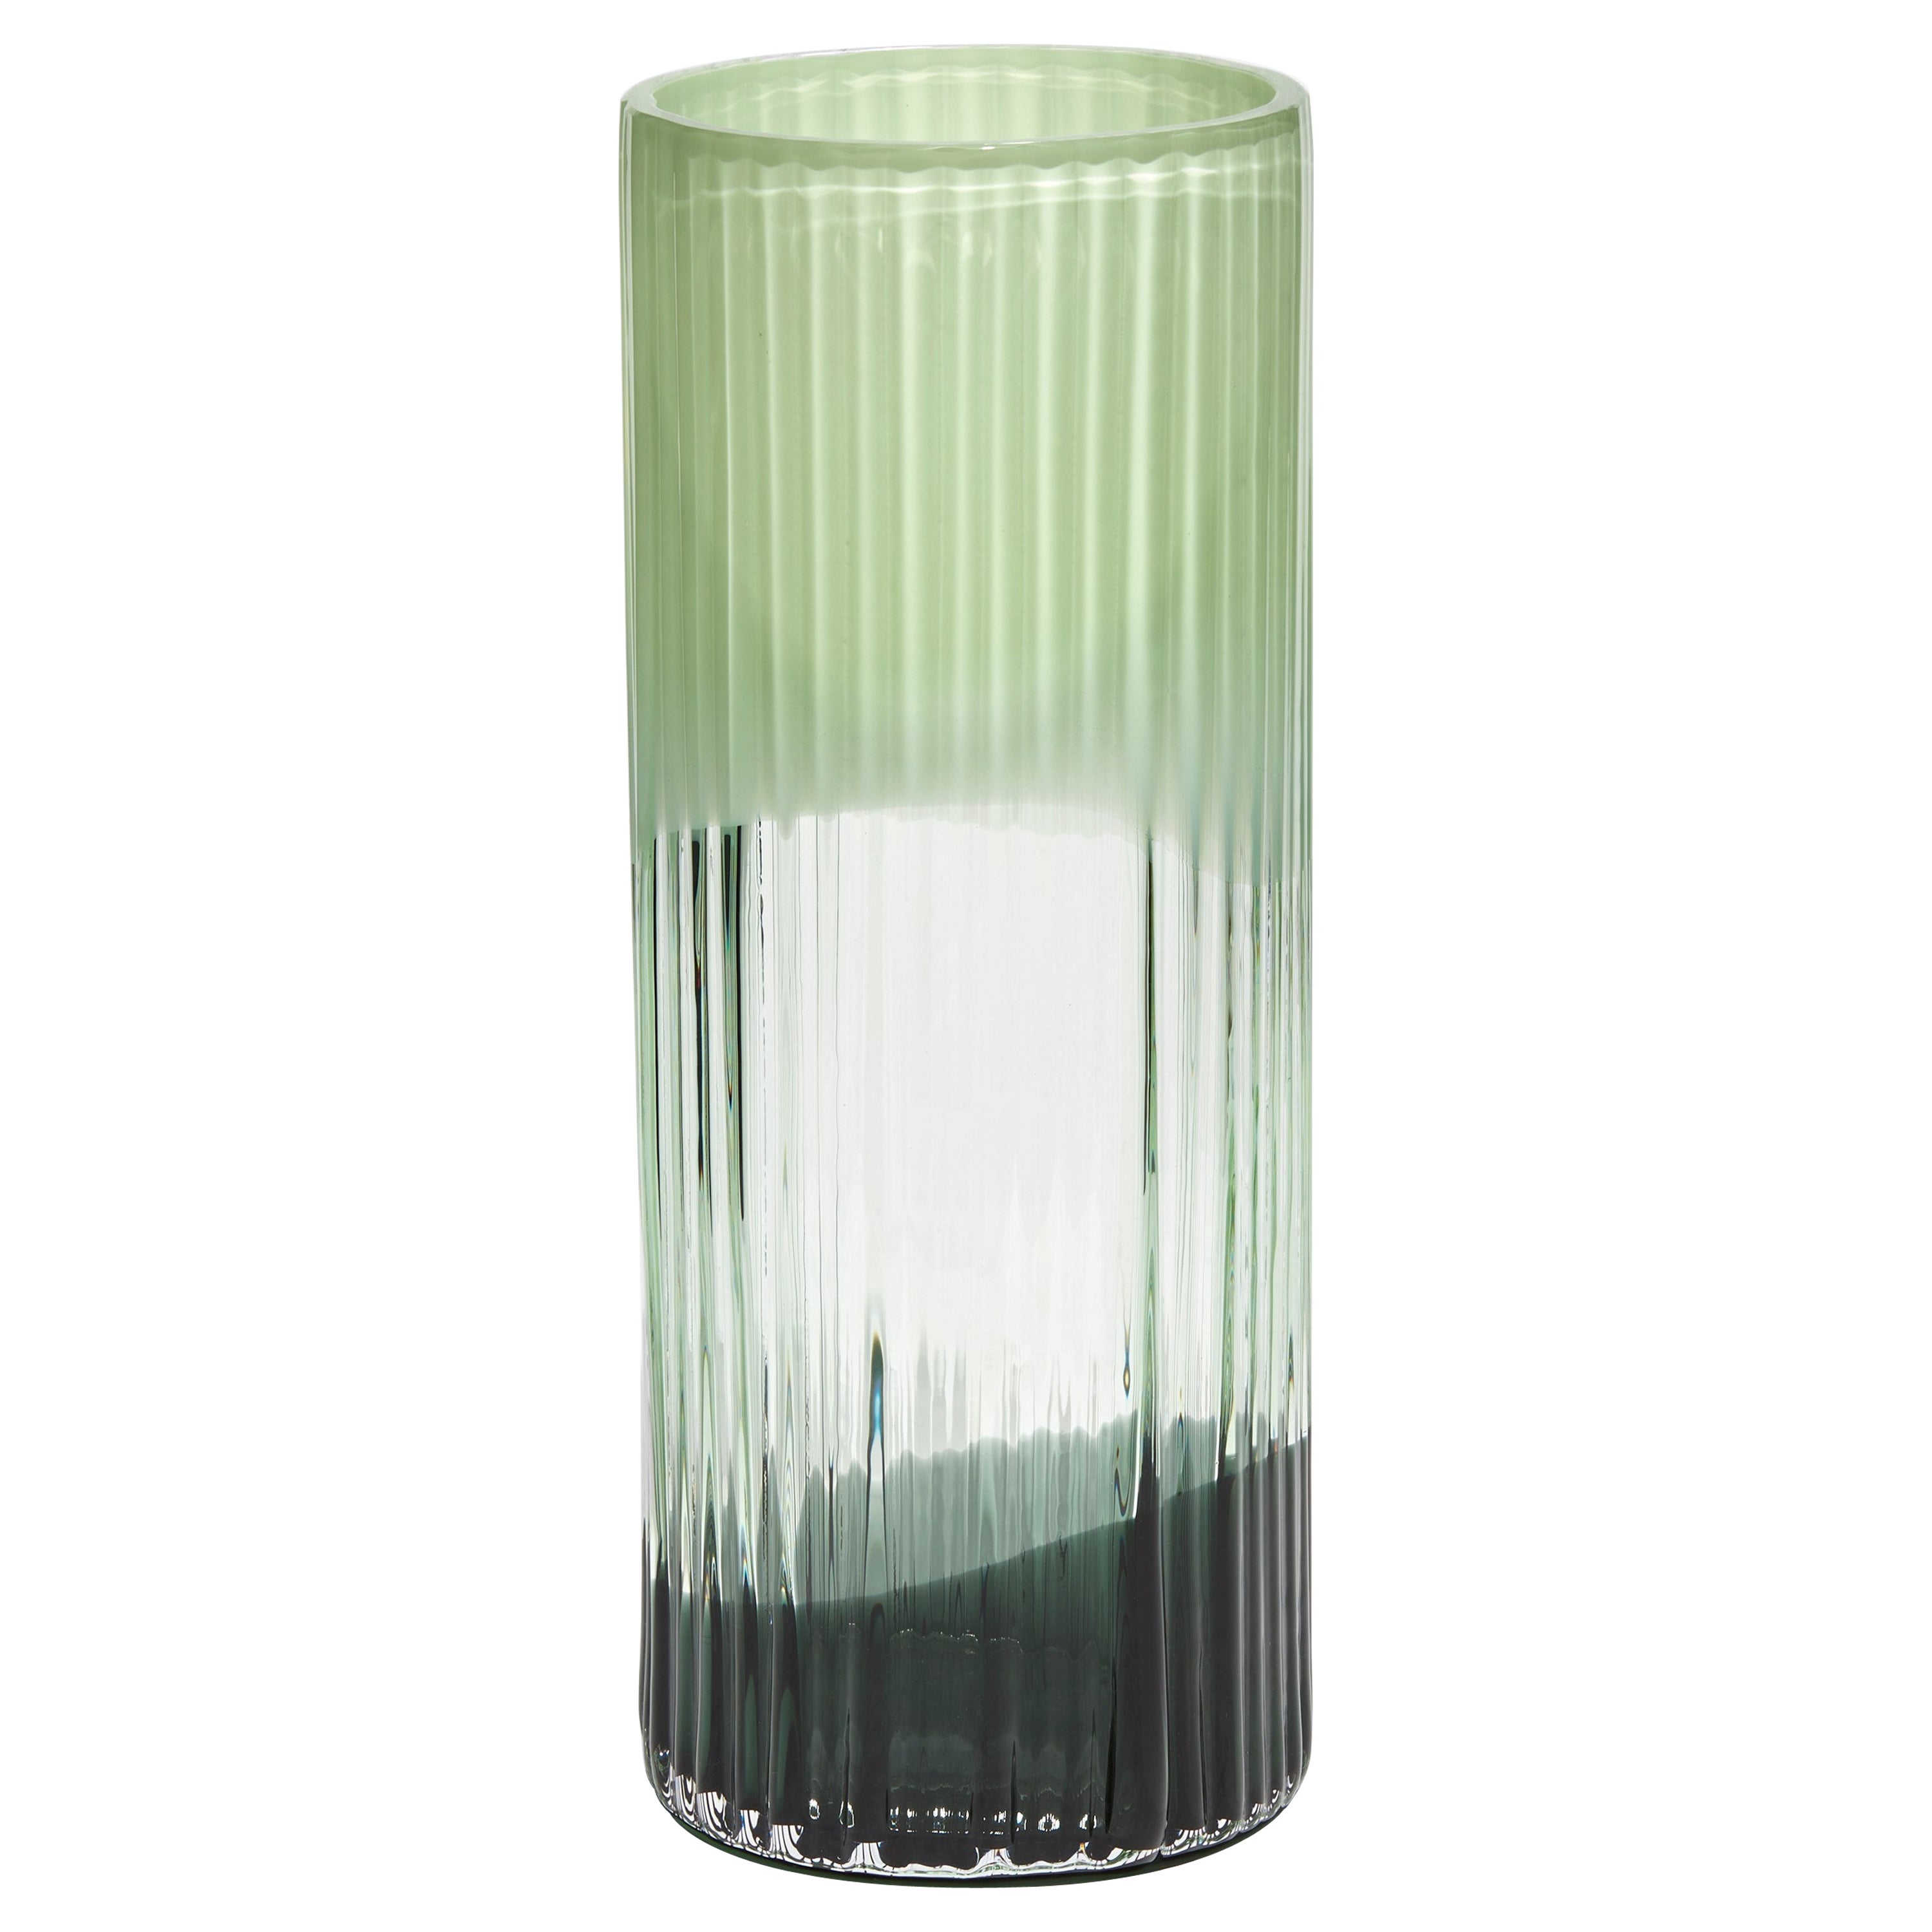 Plissé Vase in Celadon & Dark Green, a Handblown Glass Vase by Lena Bergström